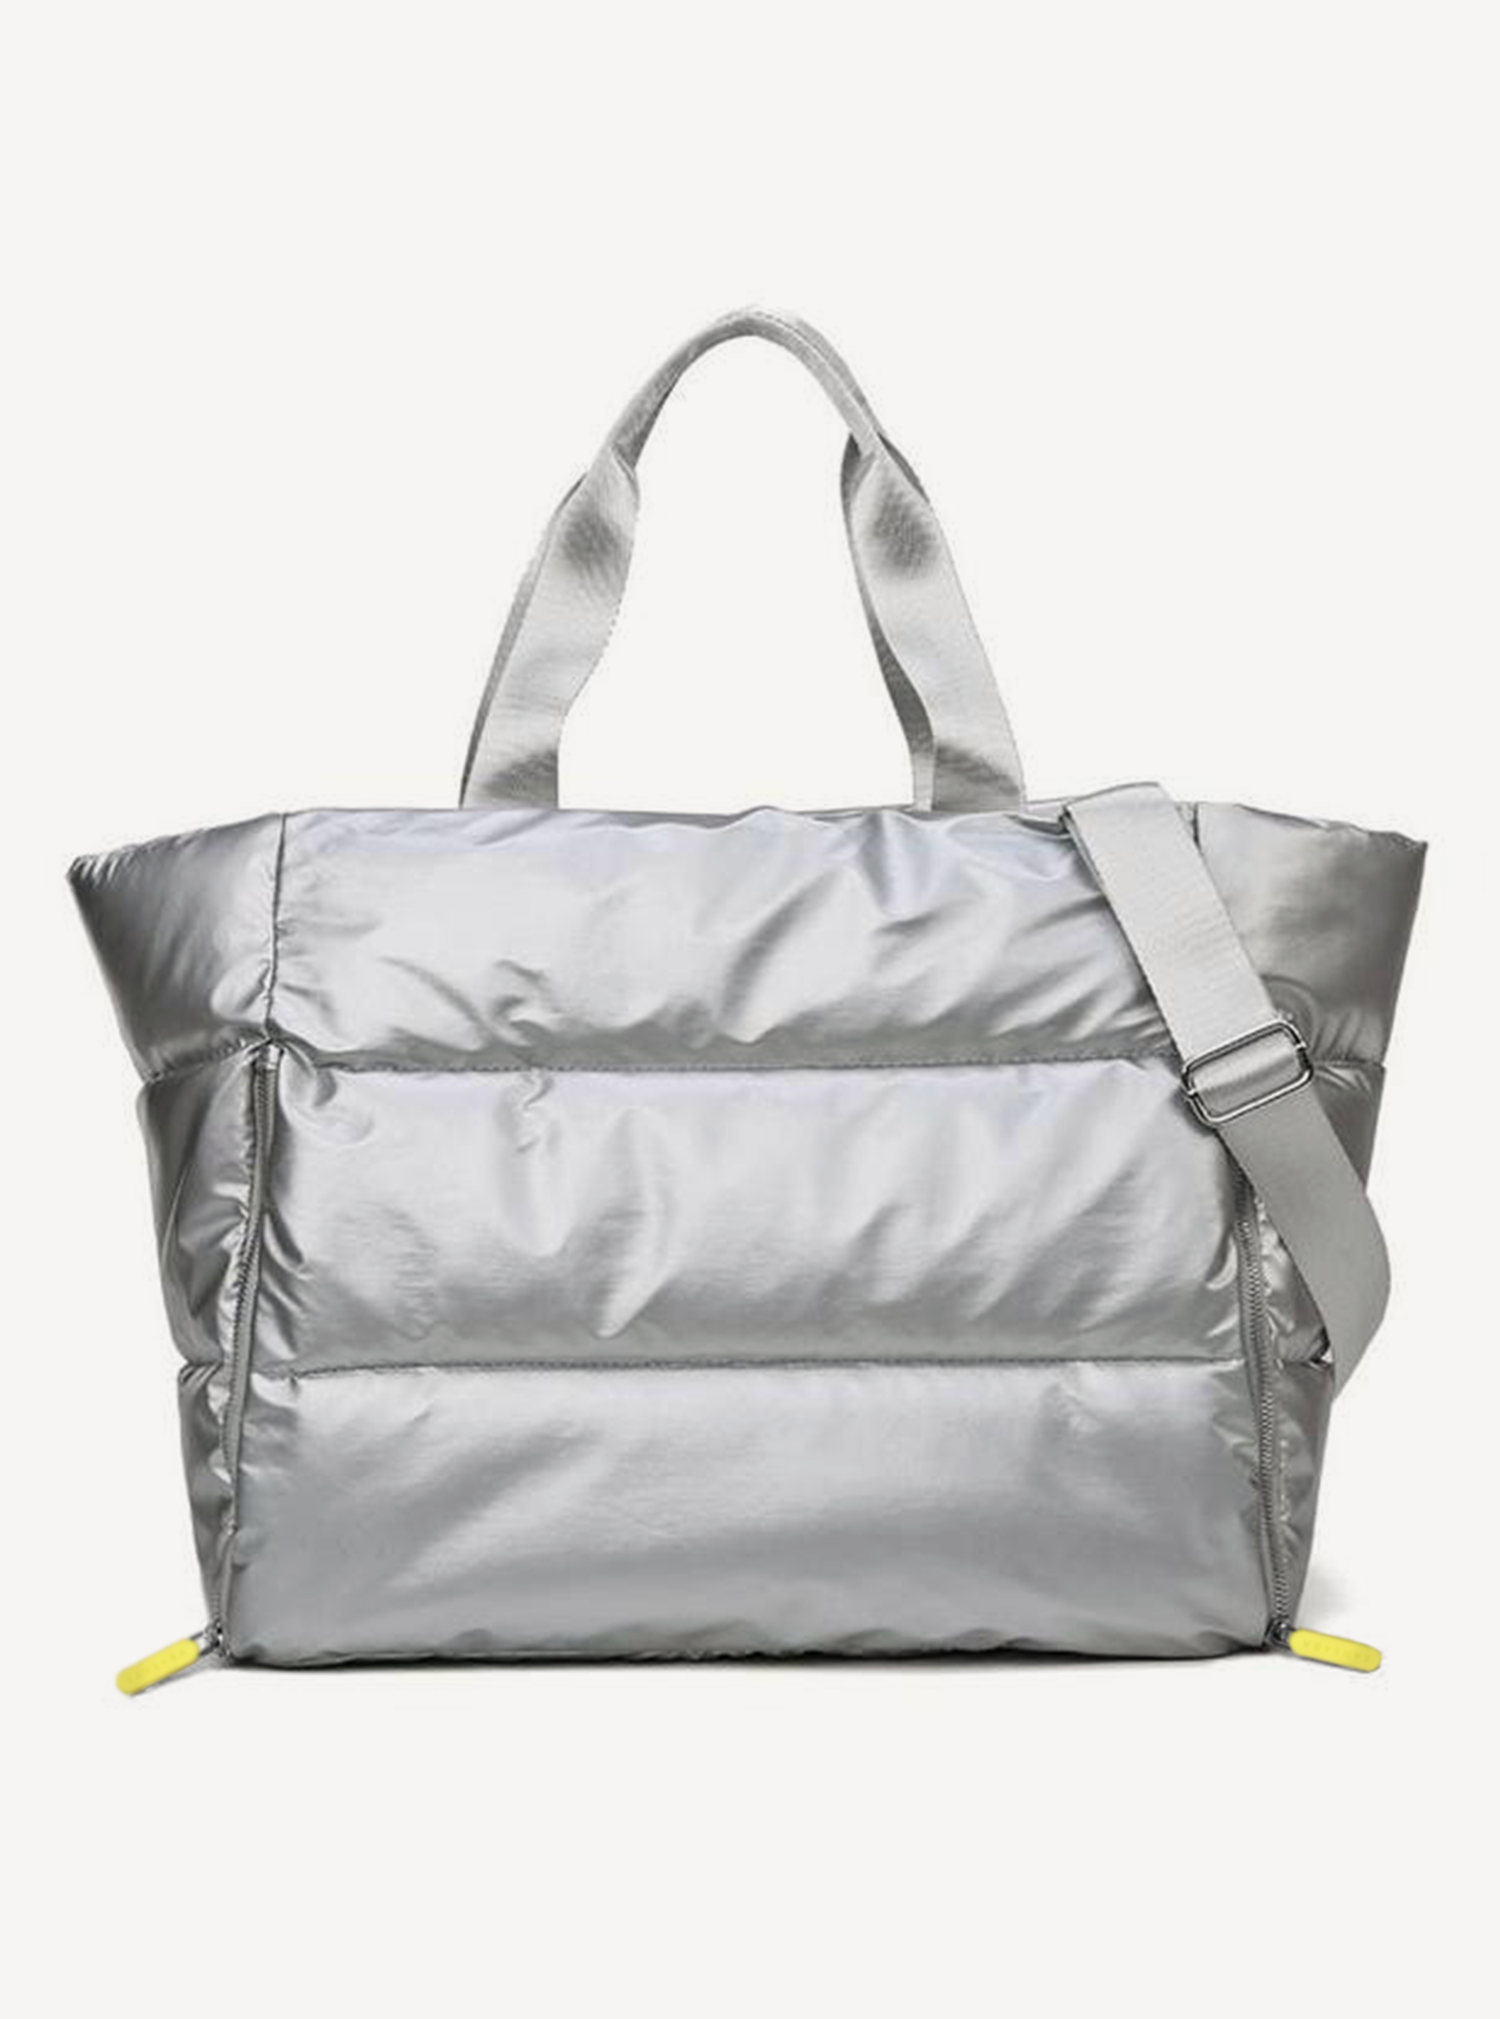 Women's Silver Bag